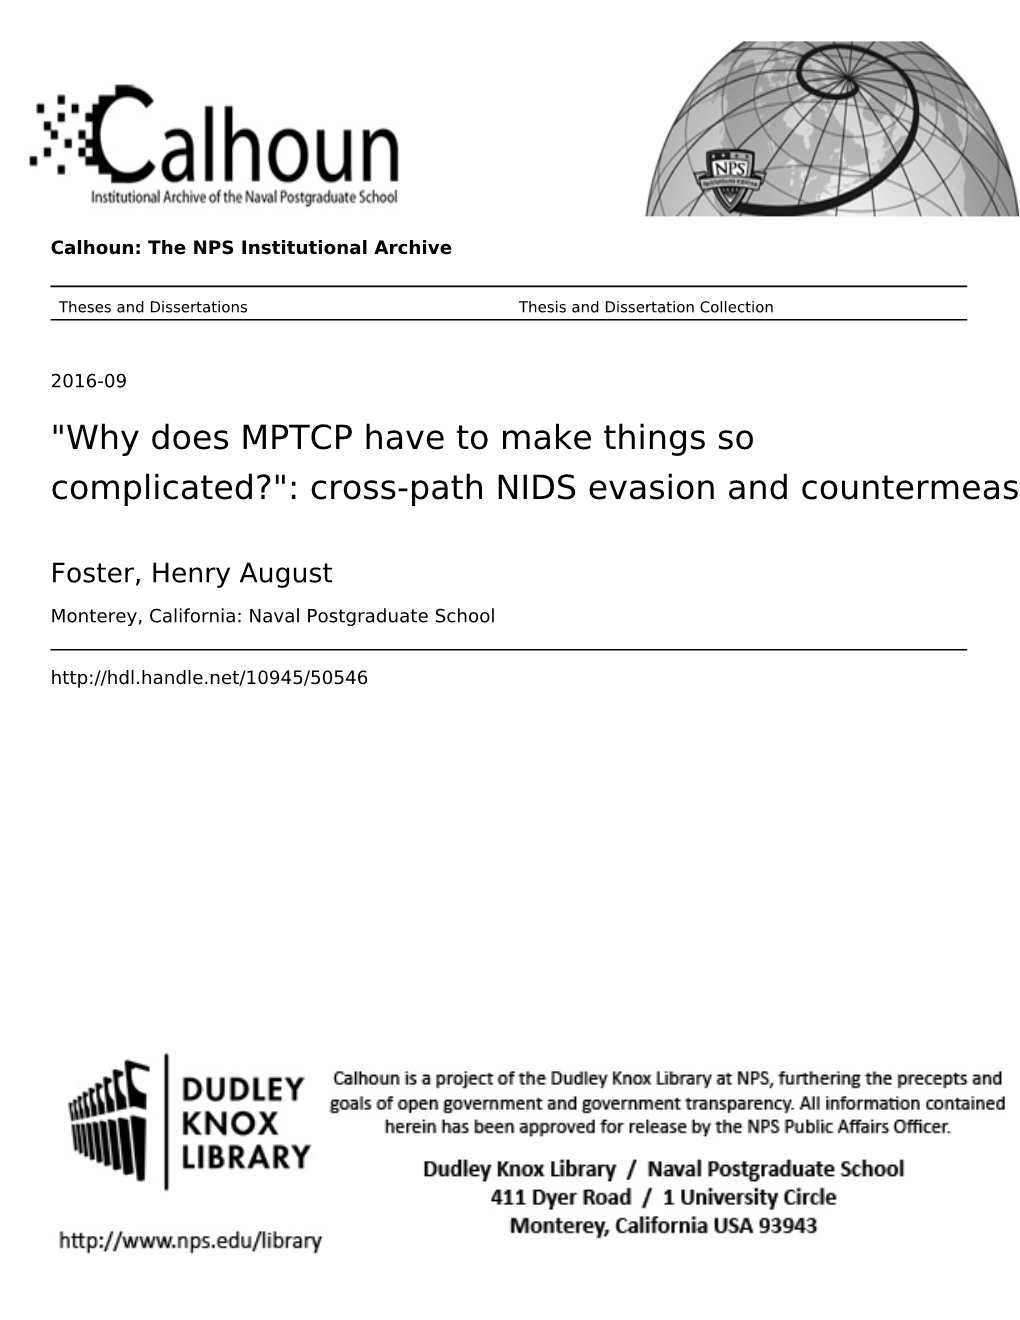 Cross-Path NIDS Evasion and Countermeasures